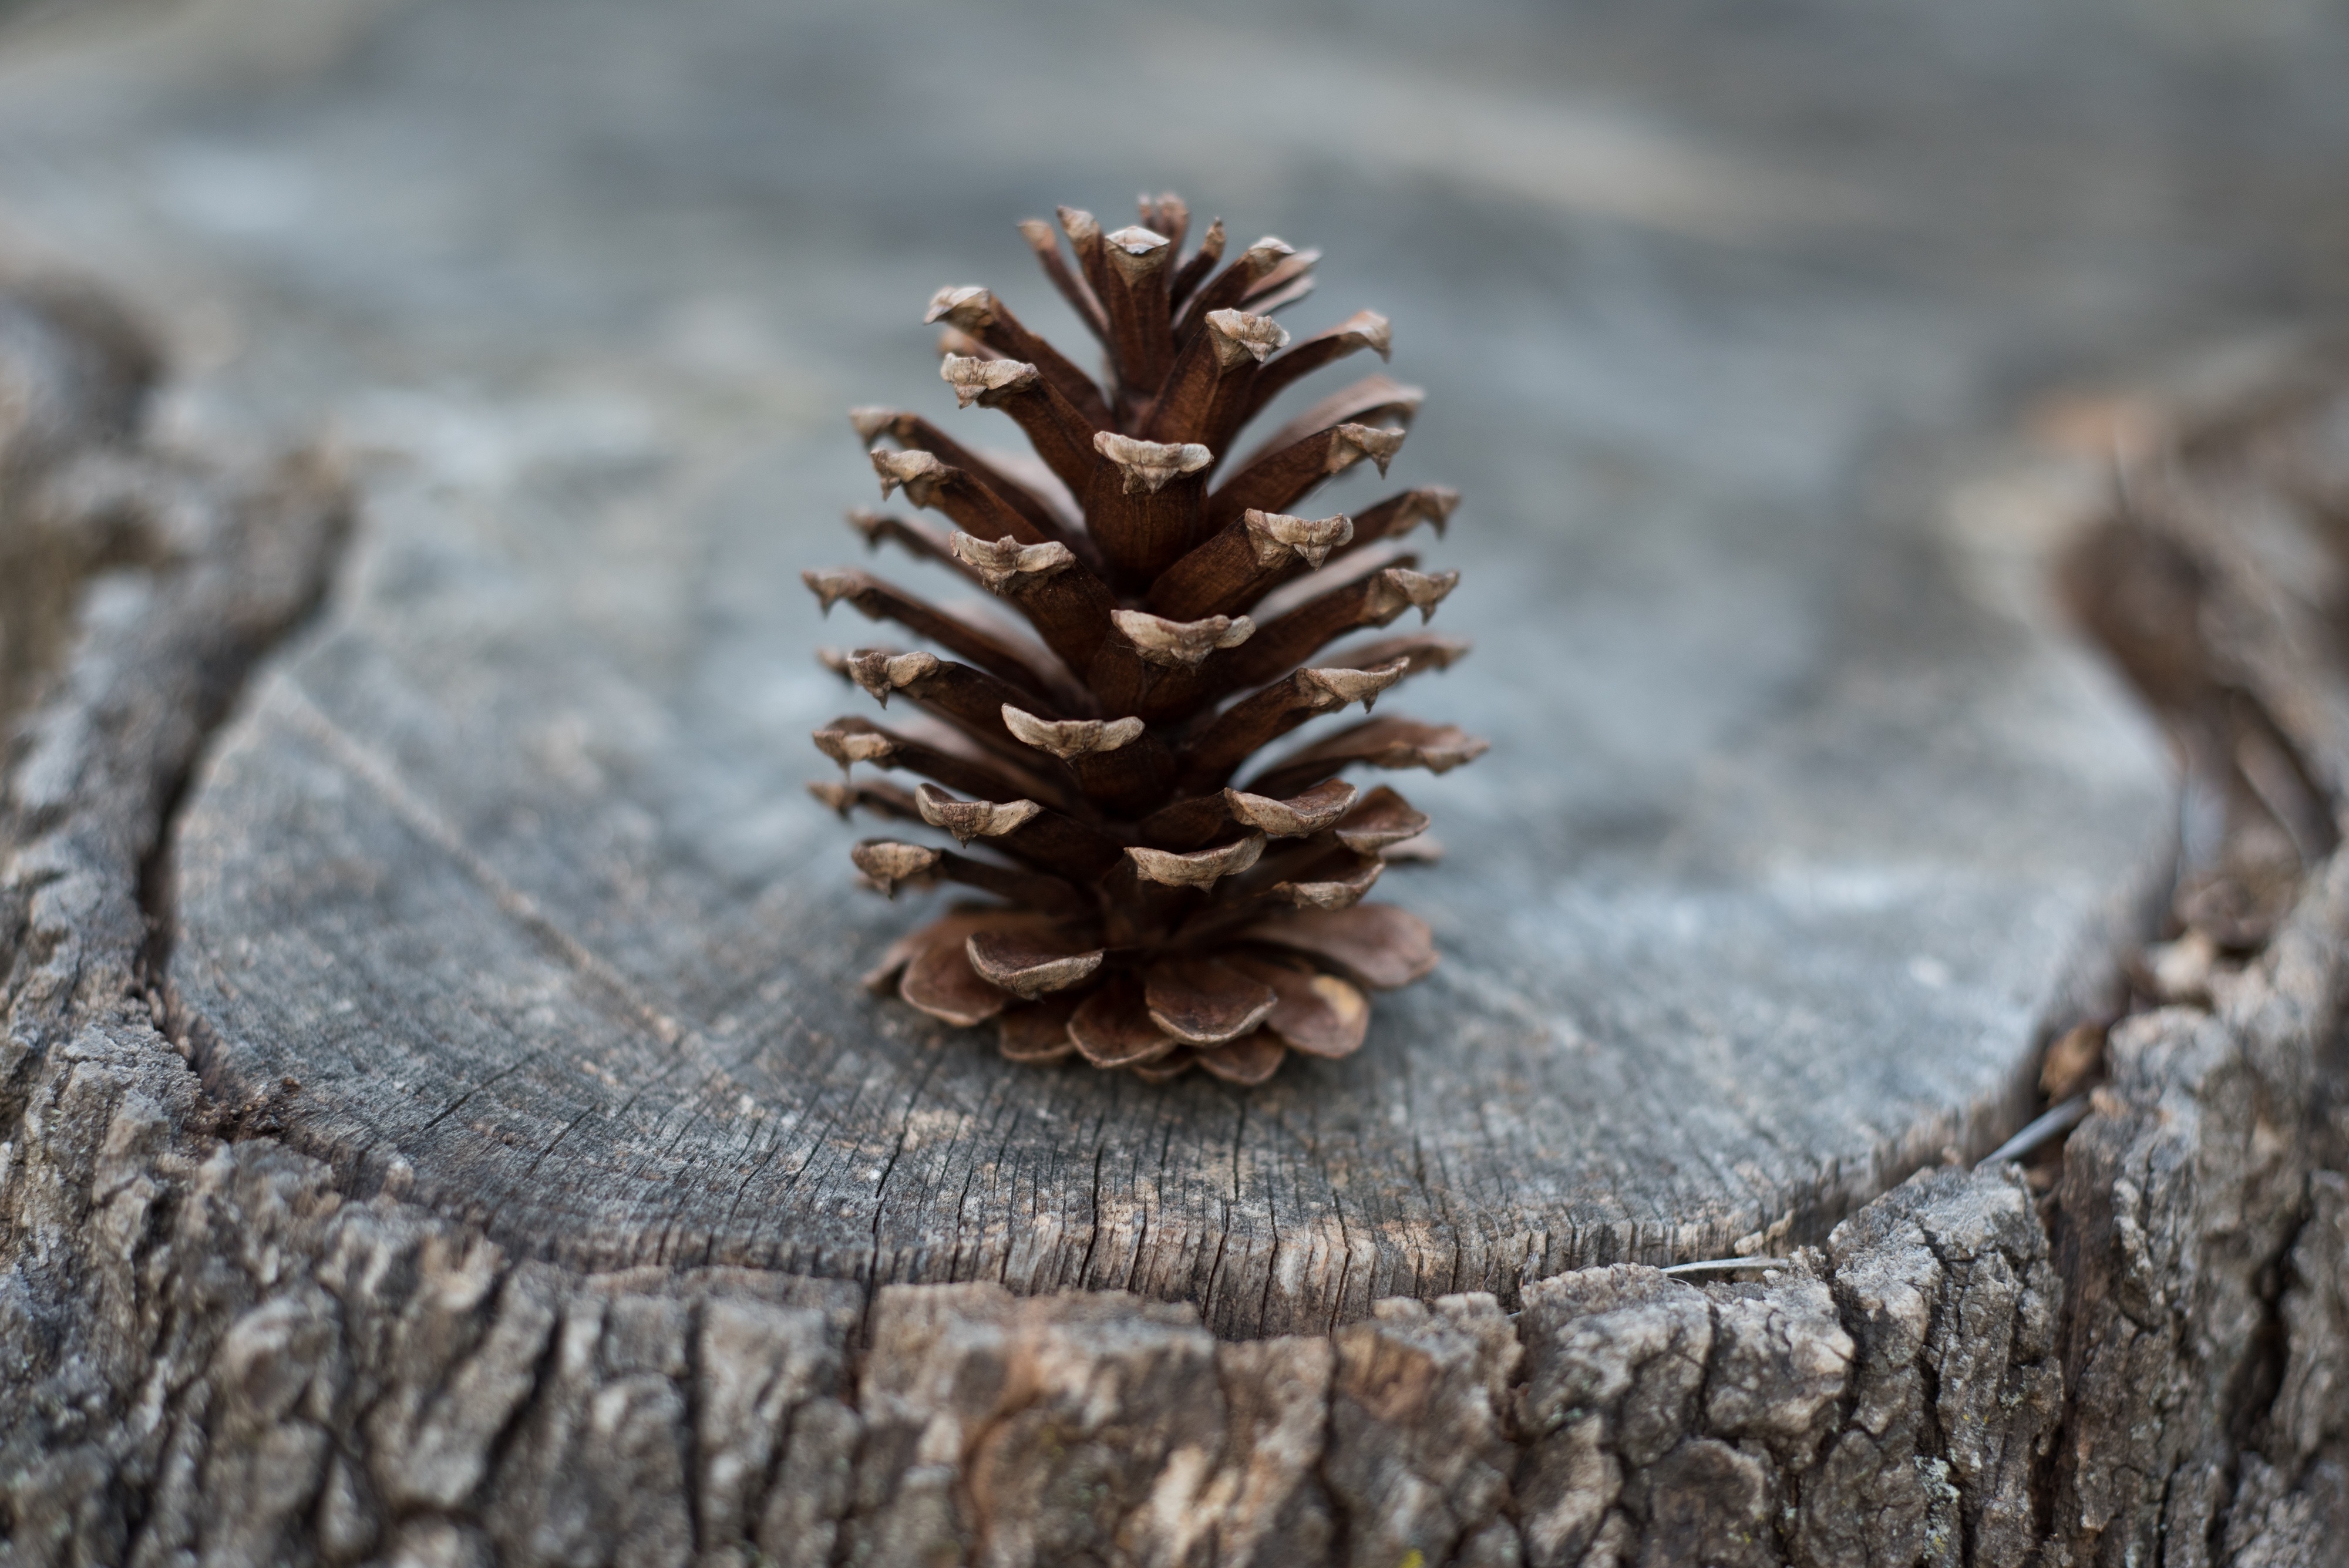 A Christmas tree cone on a tree stump